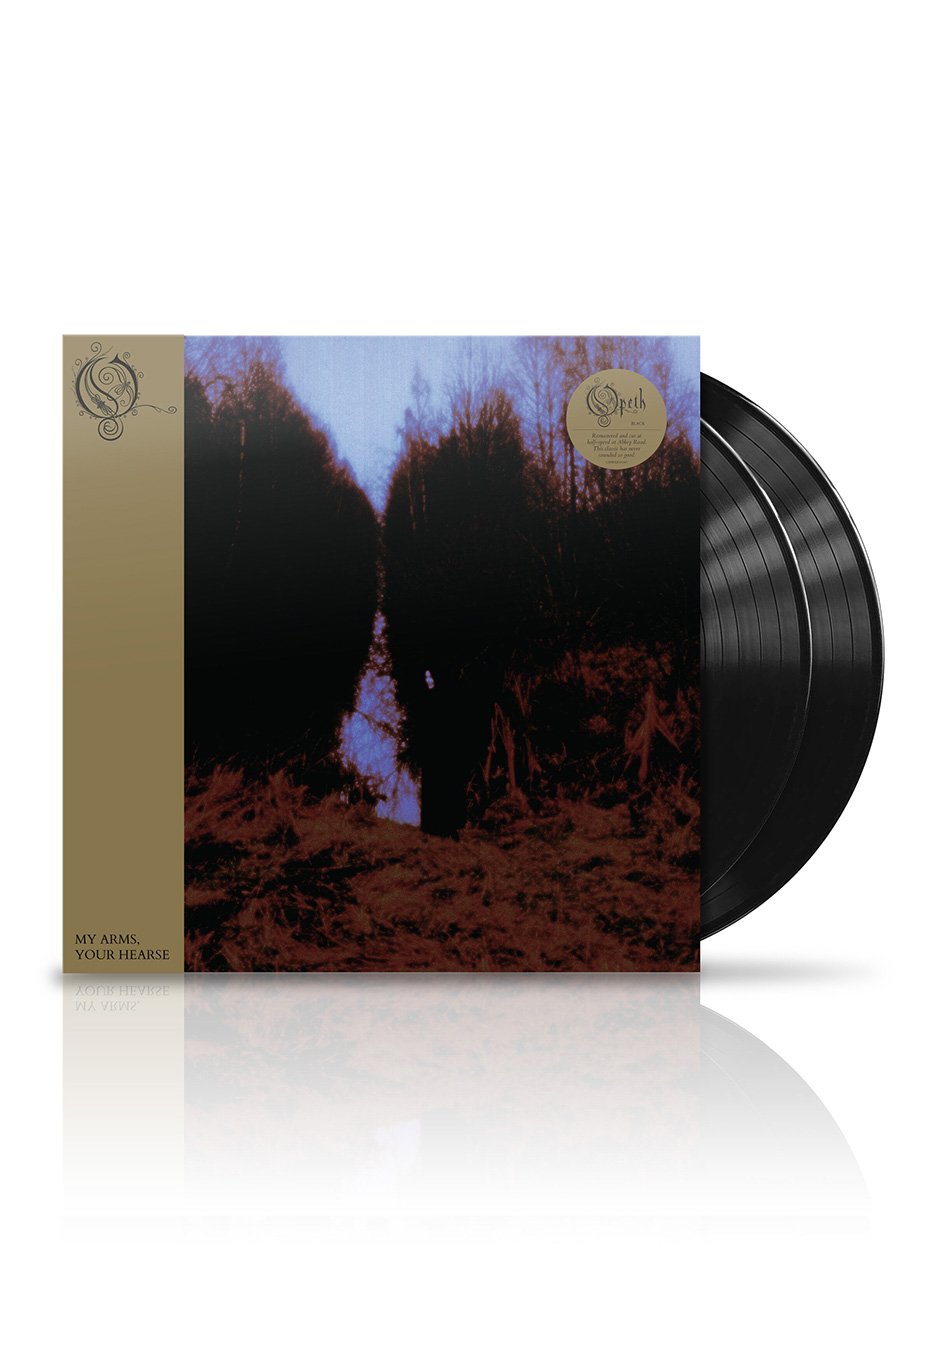 Opeth - My Arms Your Hearse Ltd. - 2 Vinyl